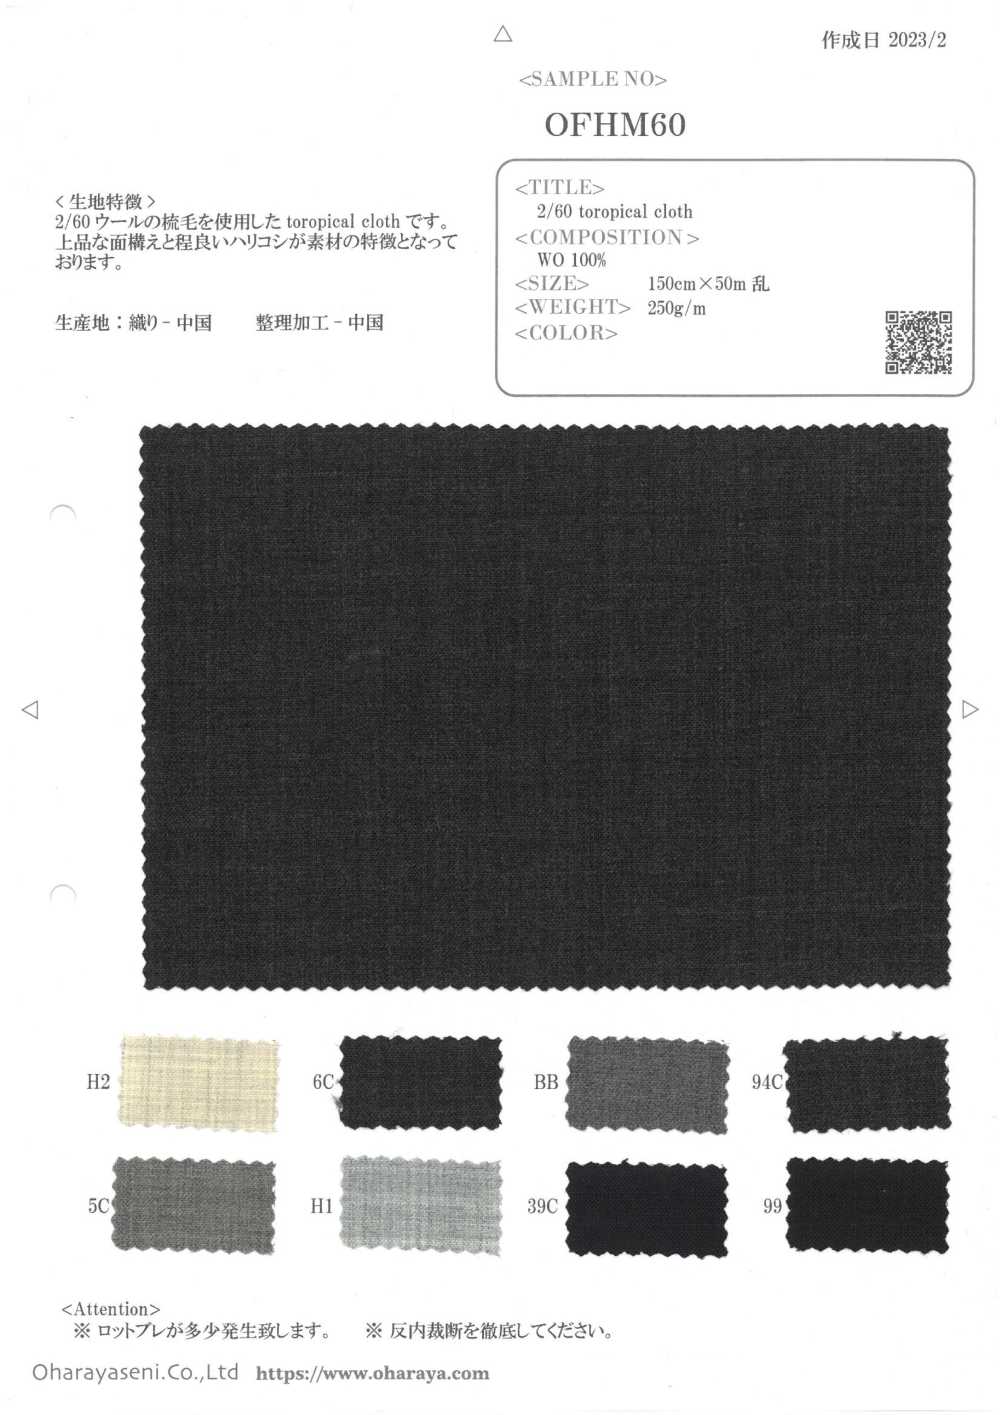 OFHM60 2/60 toropical cloth[원단] Oharayaseni